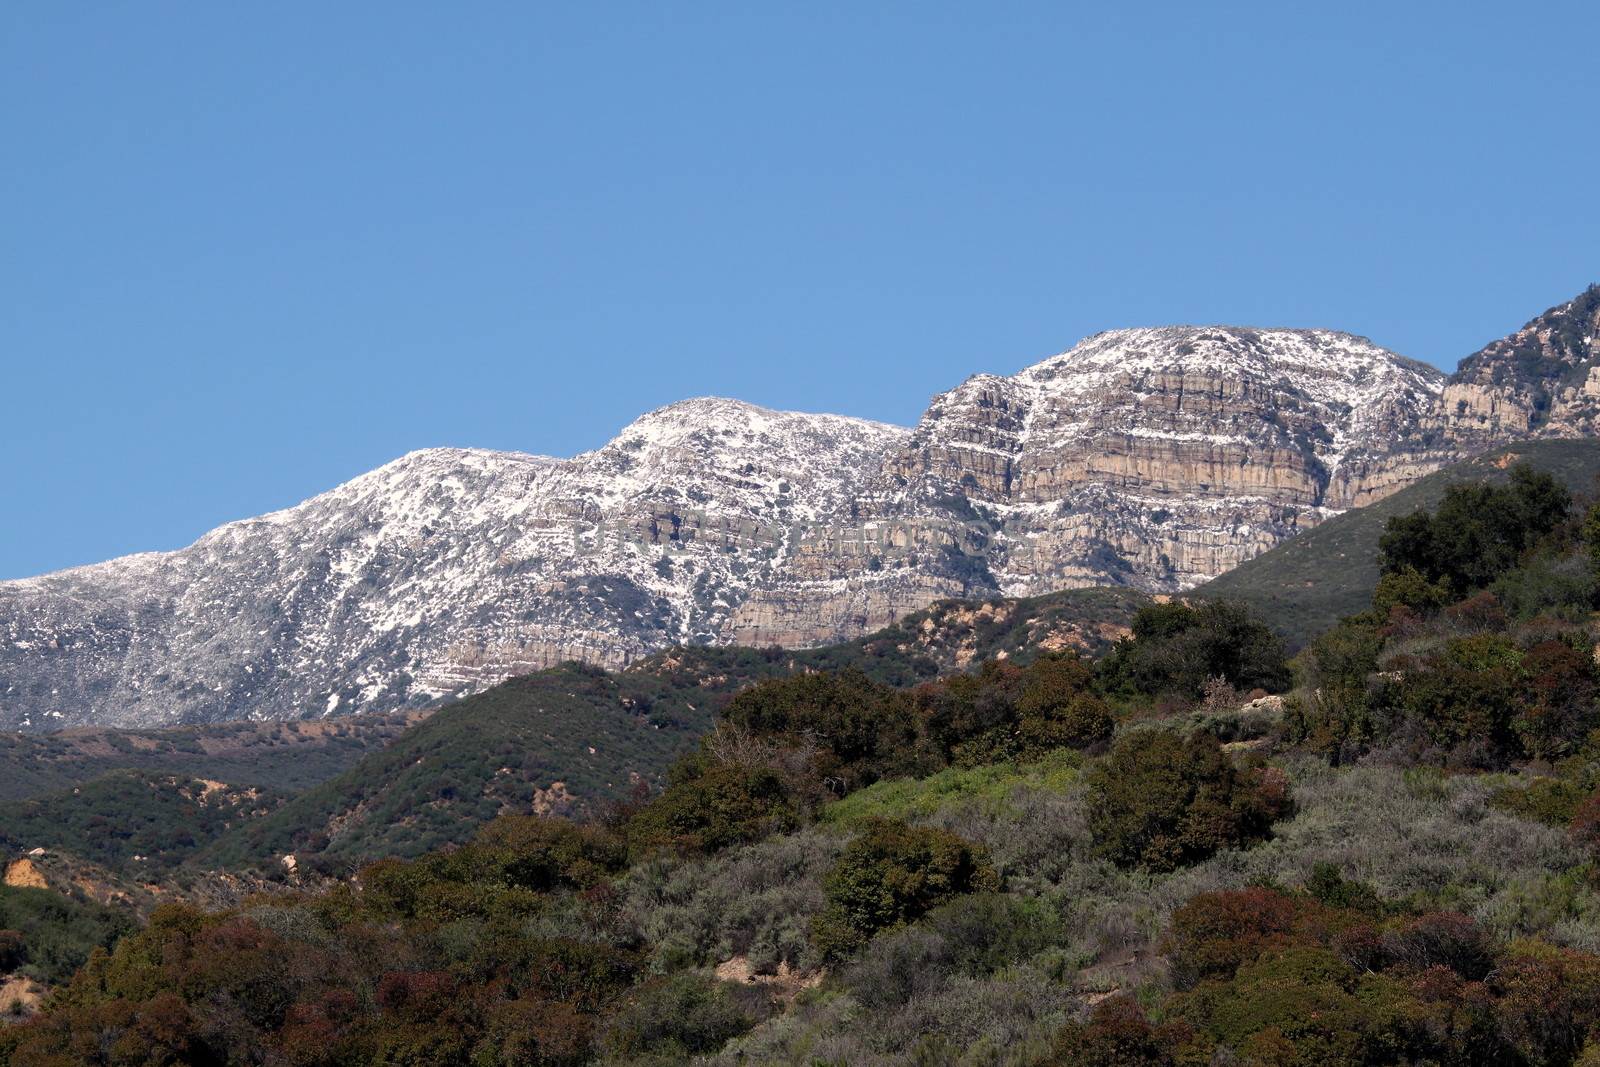 Topa Topa mountains with snow near Ojai, California.